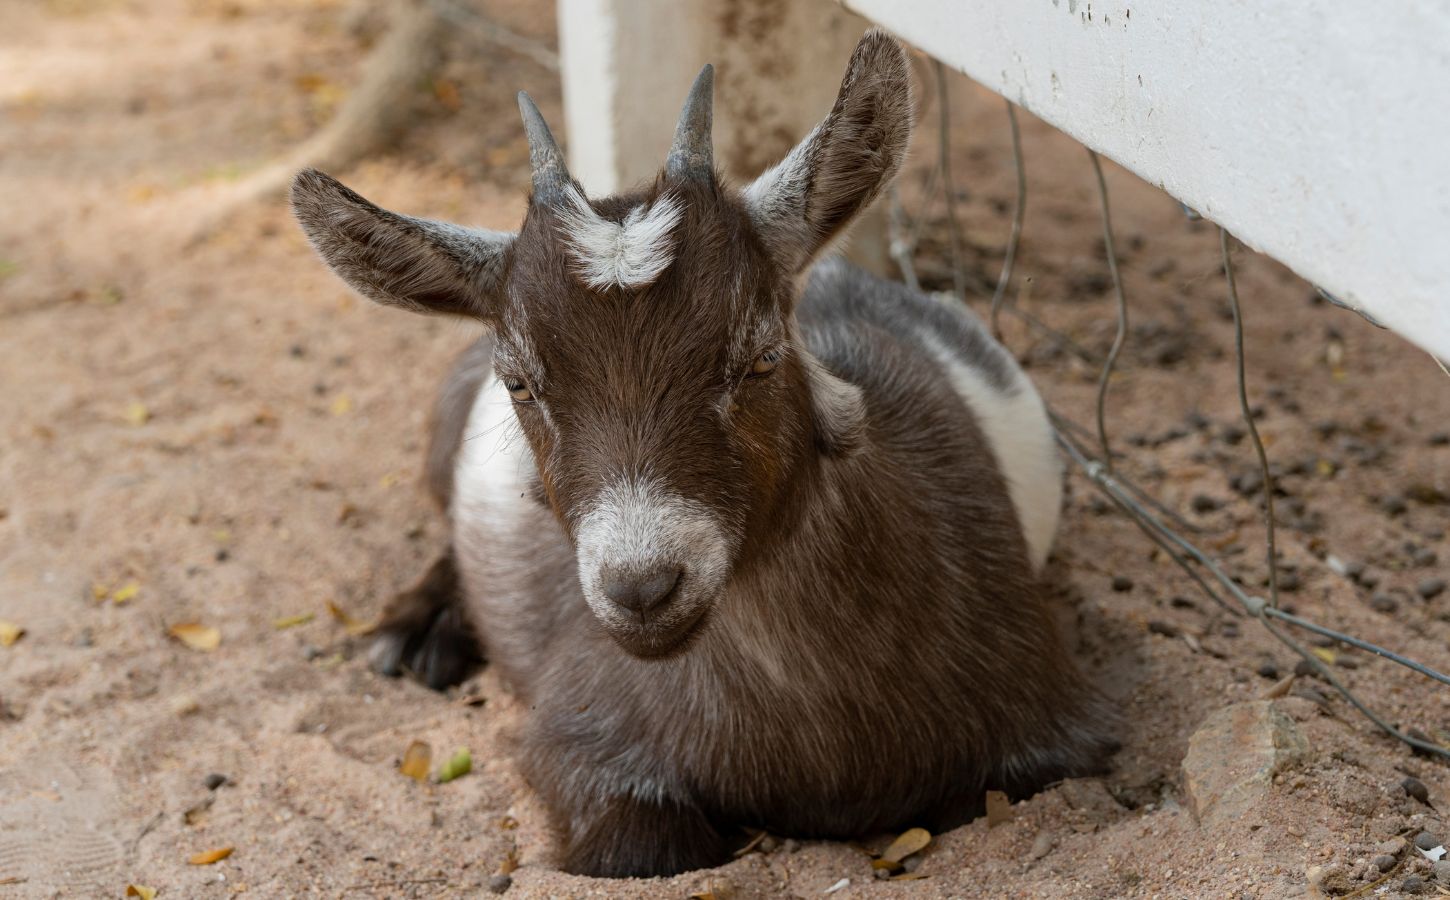 A pygmy goat at a zoo